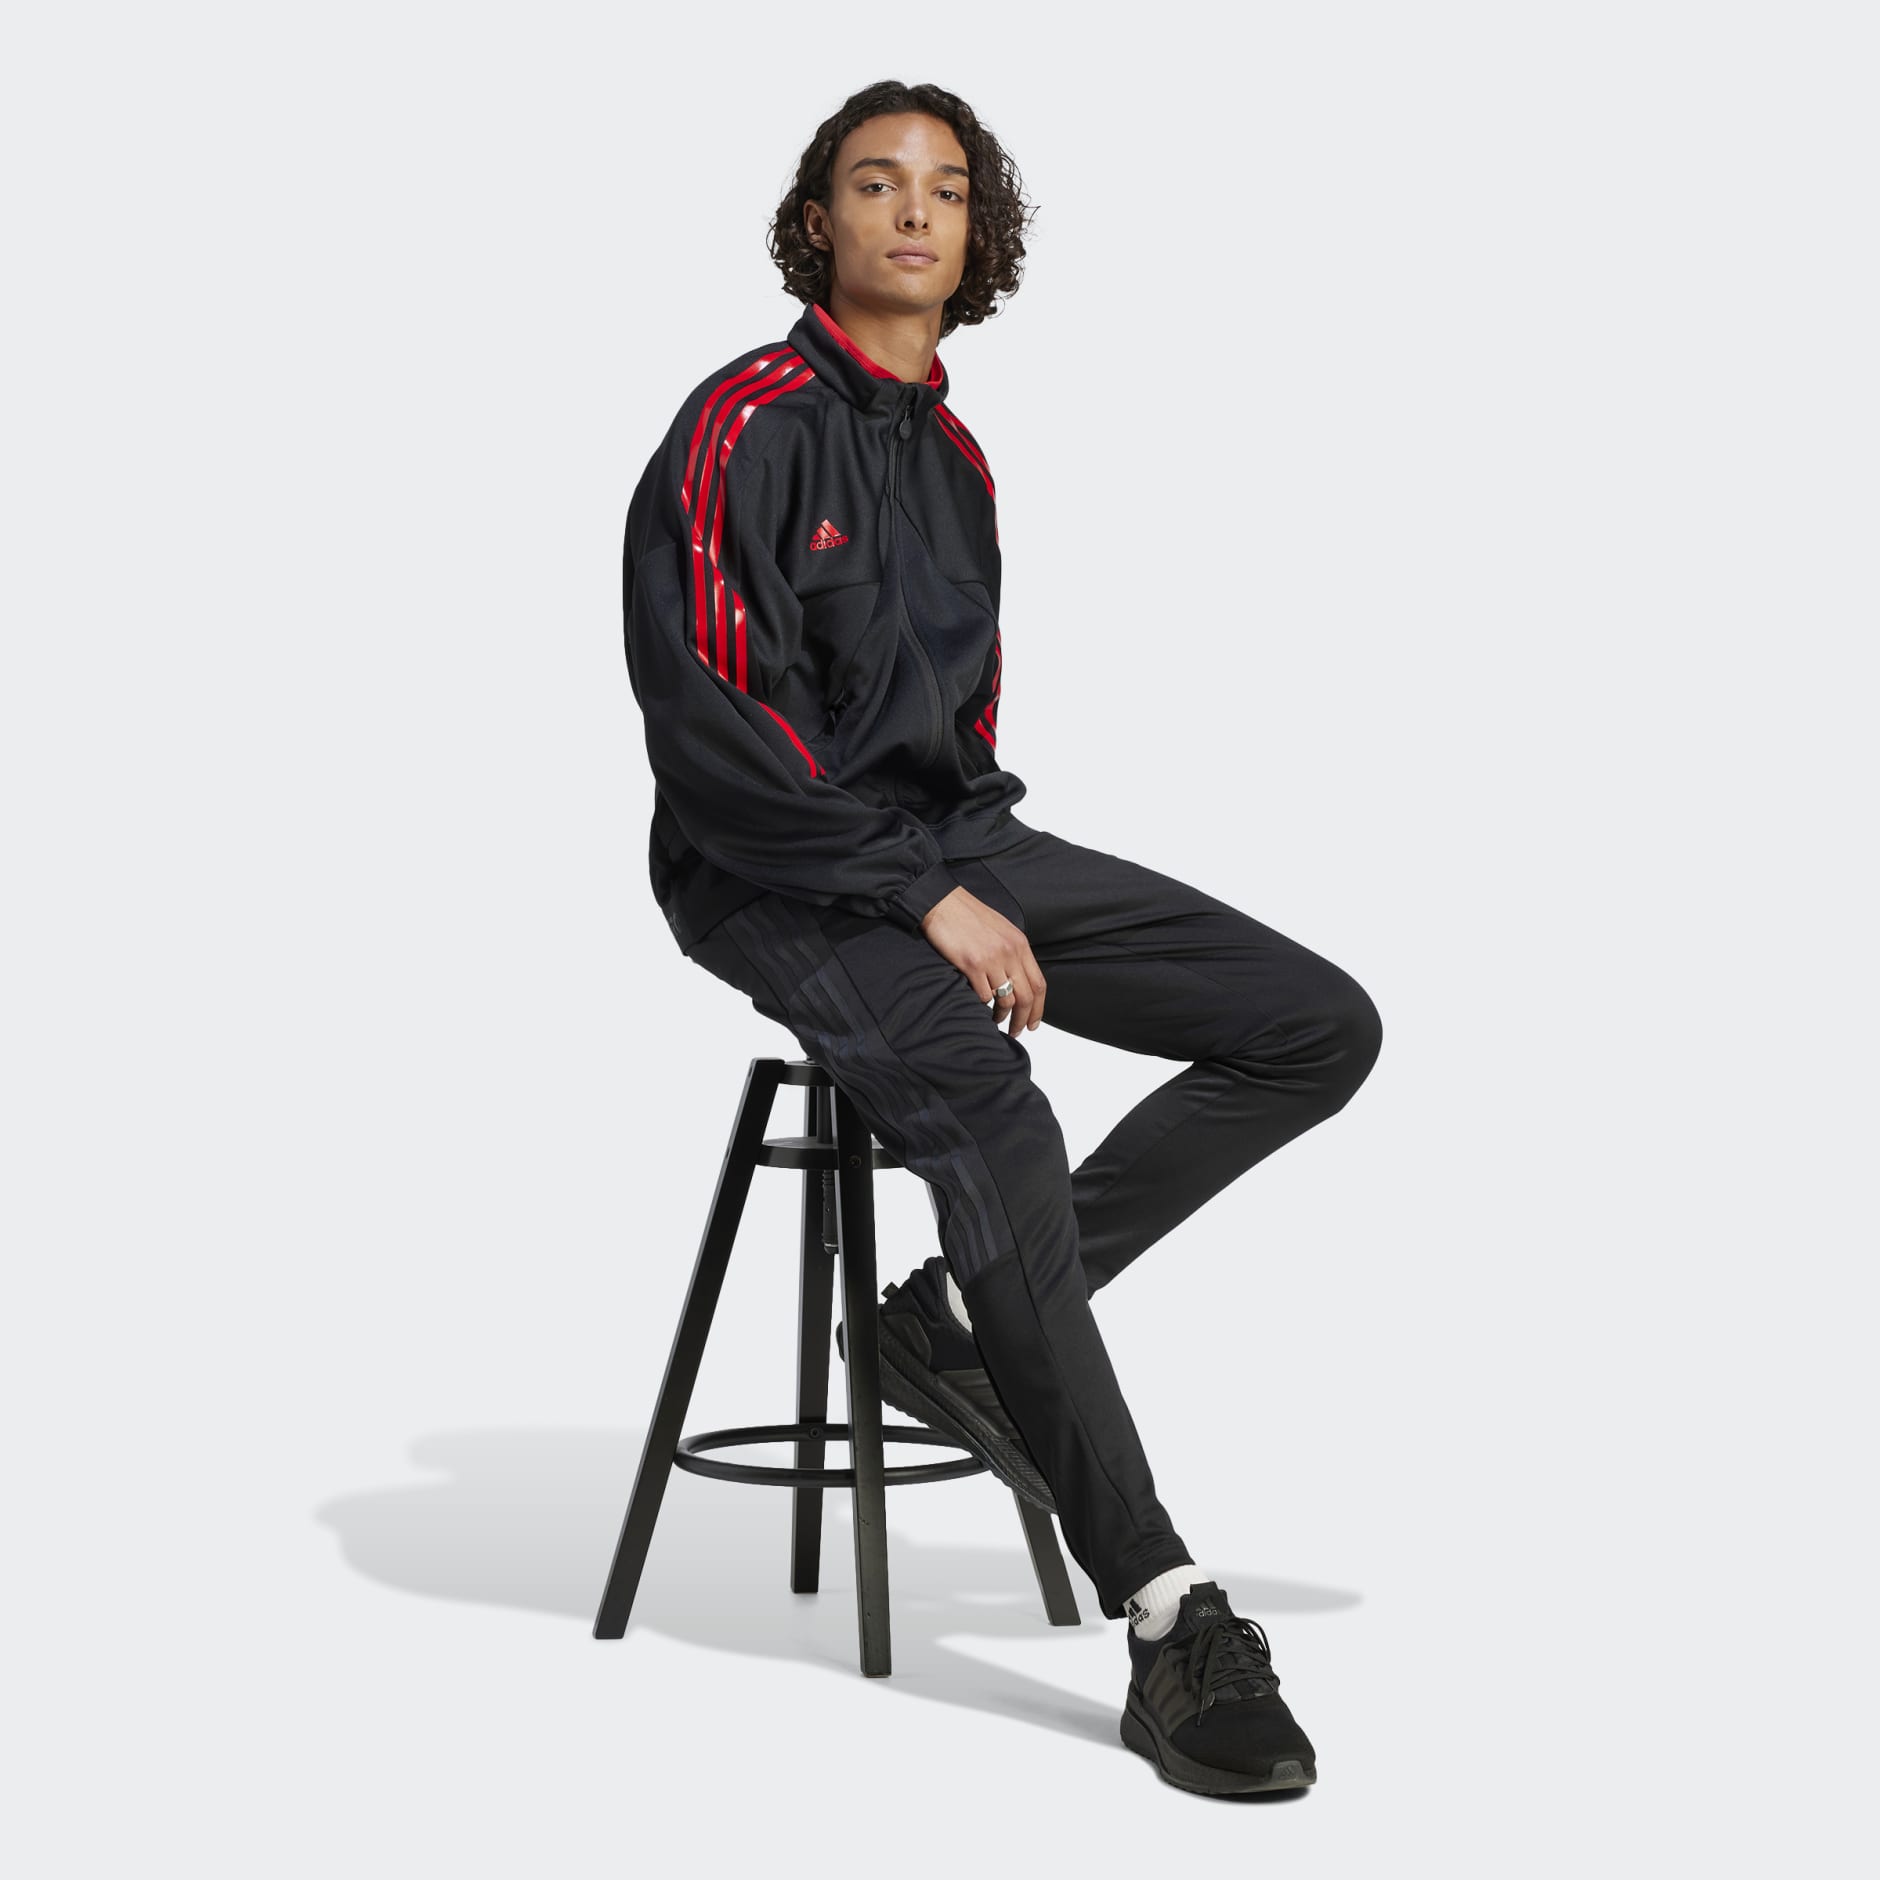 Clothing - Tiro Pants - Black | adidas South Africa